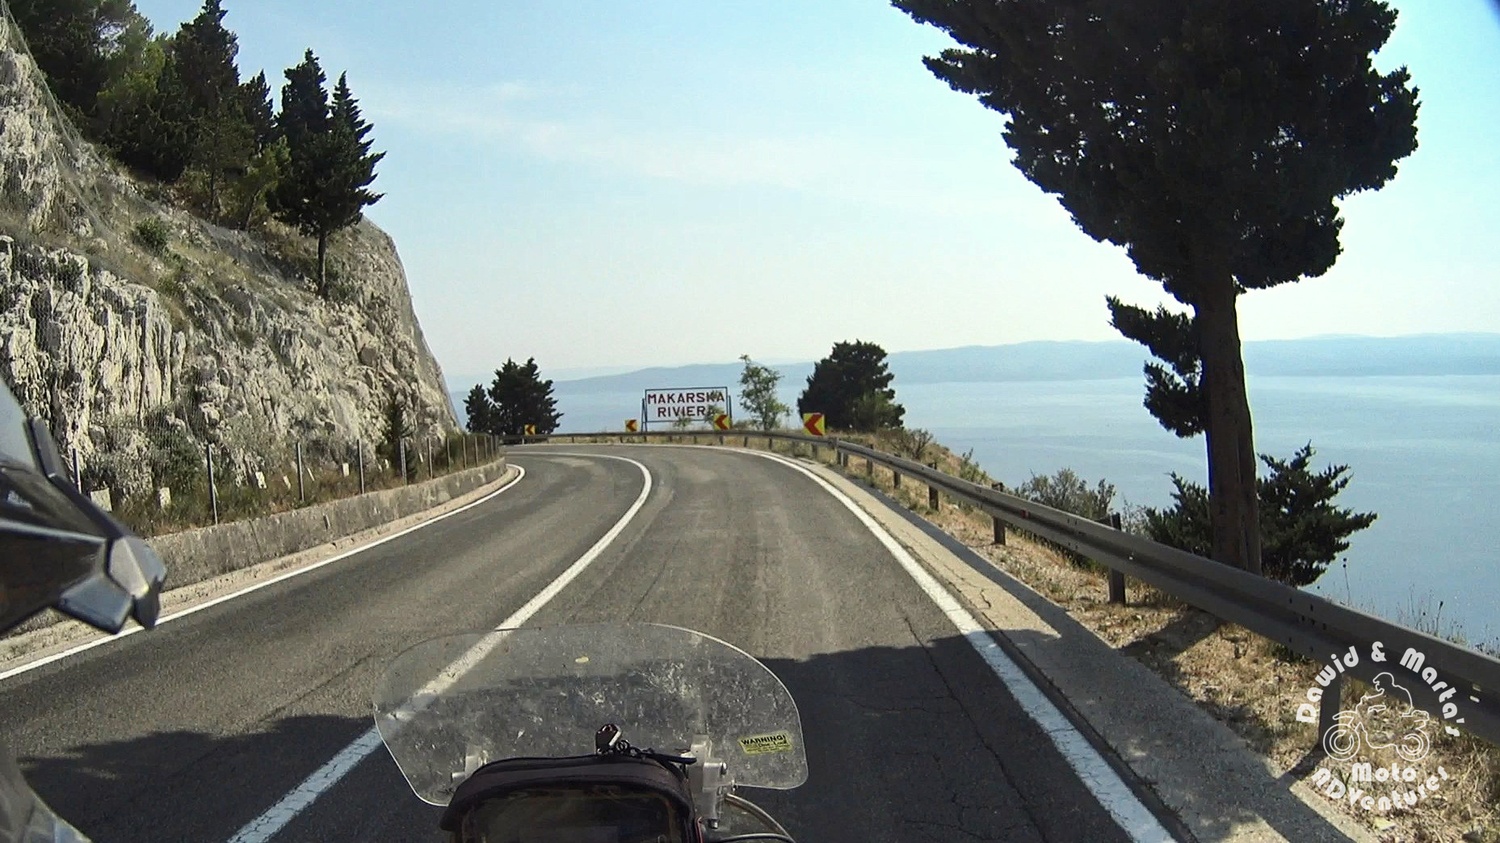 Makarska riviera sign at the Adriatic Highway